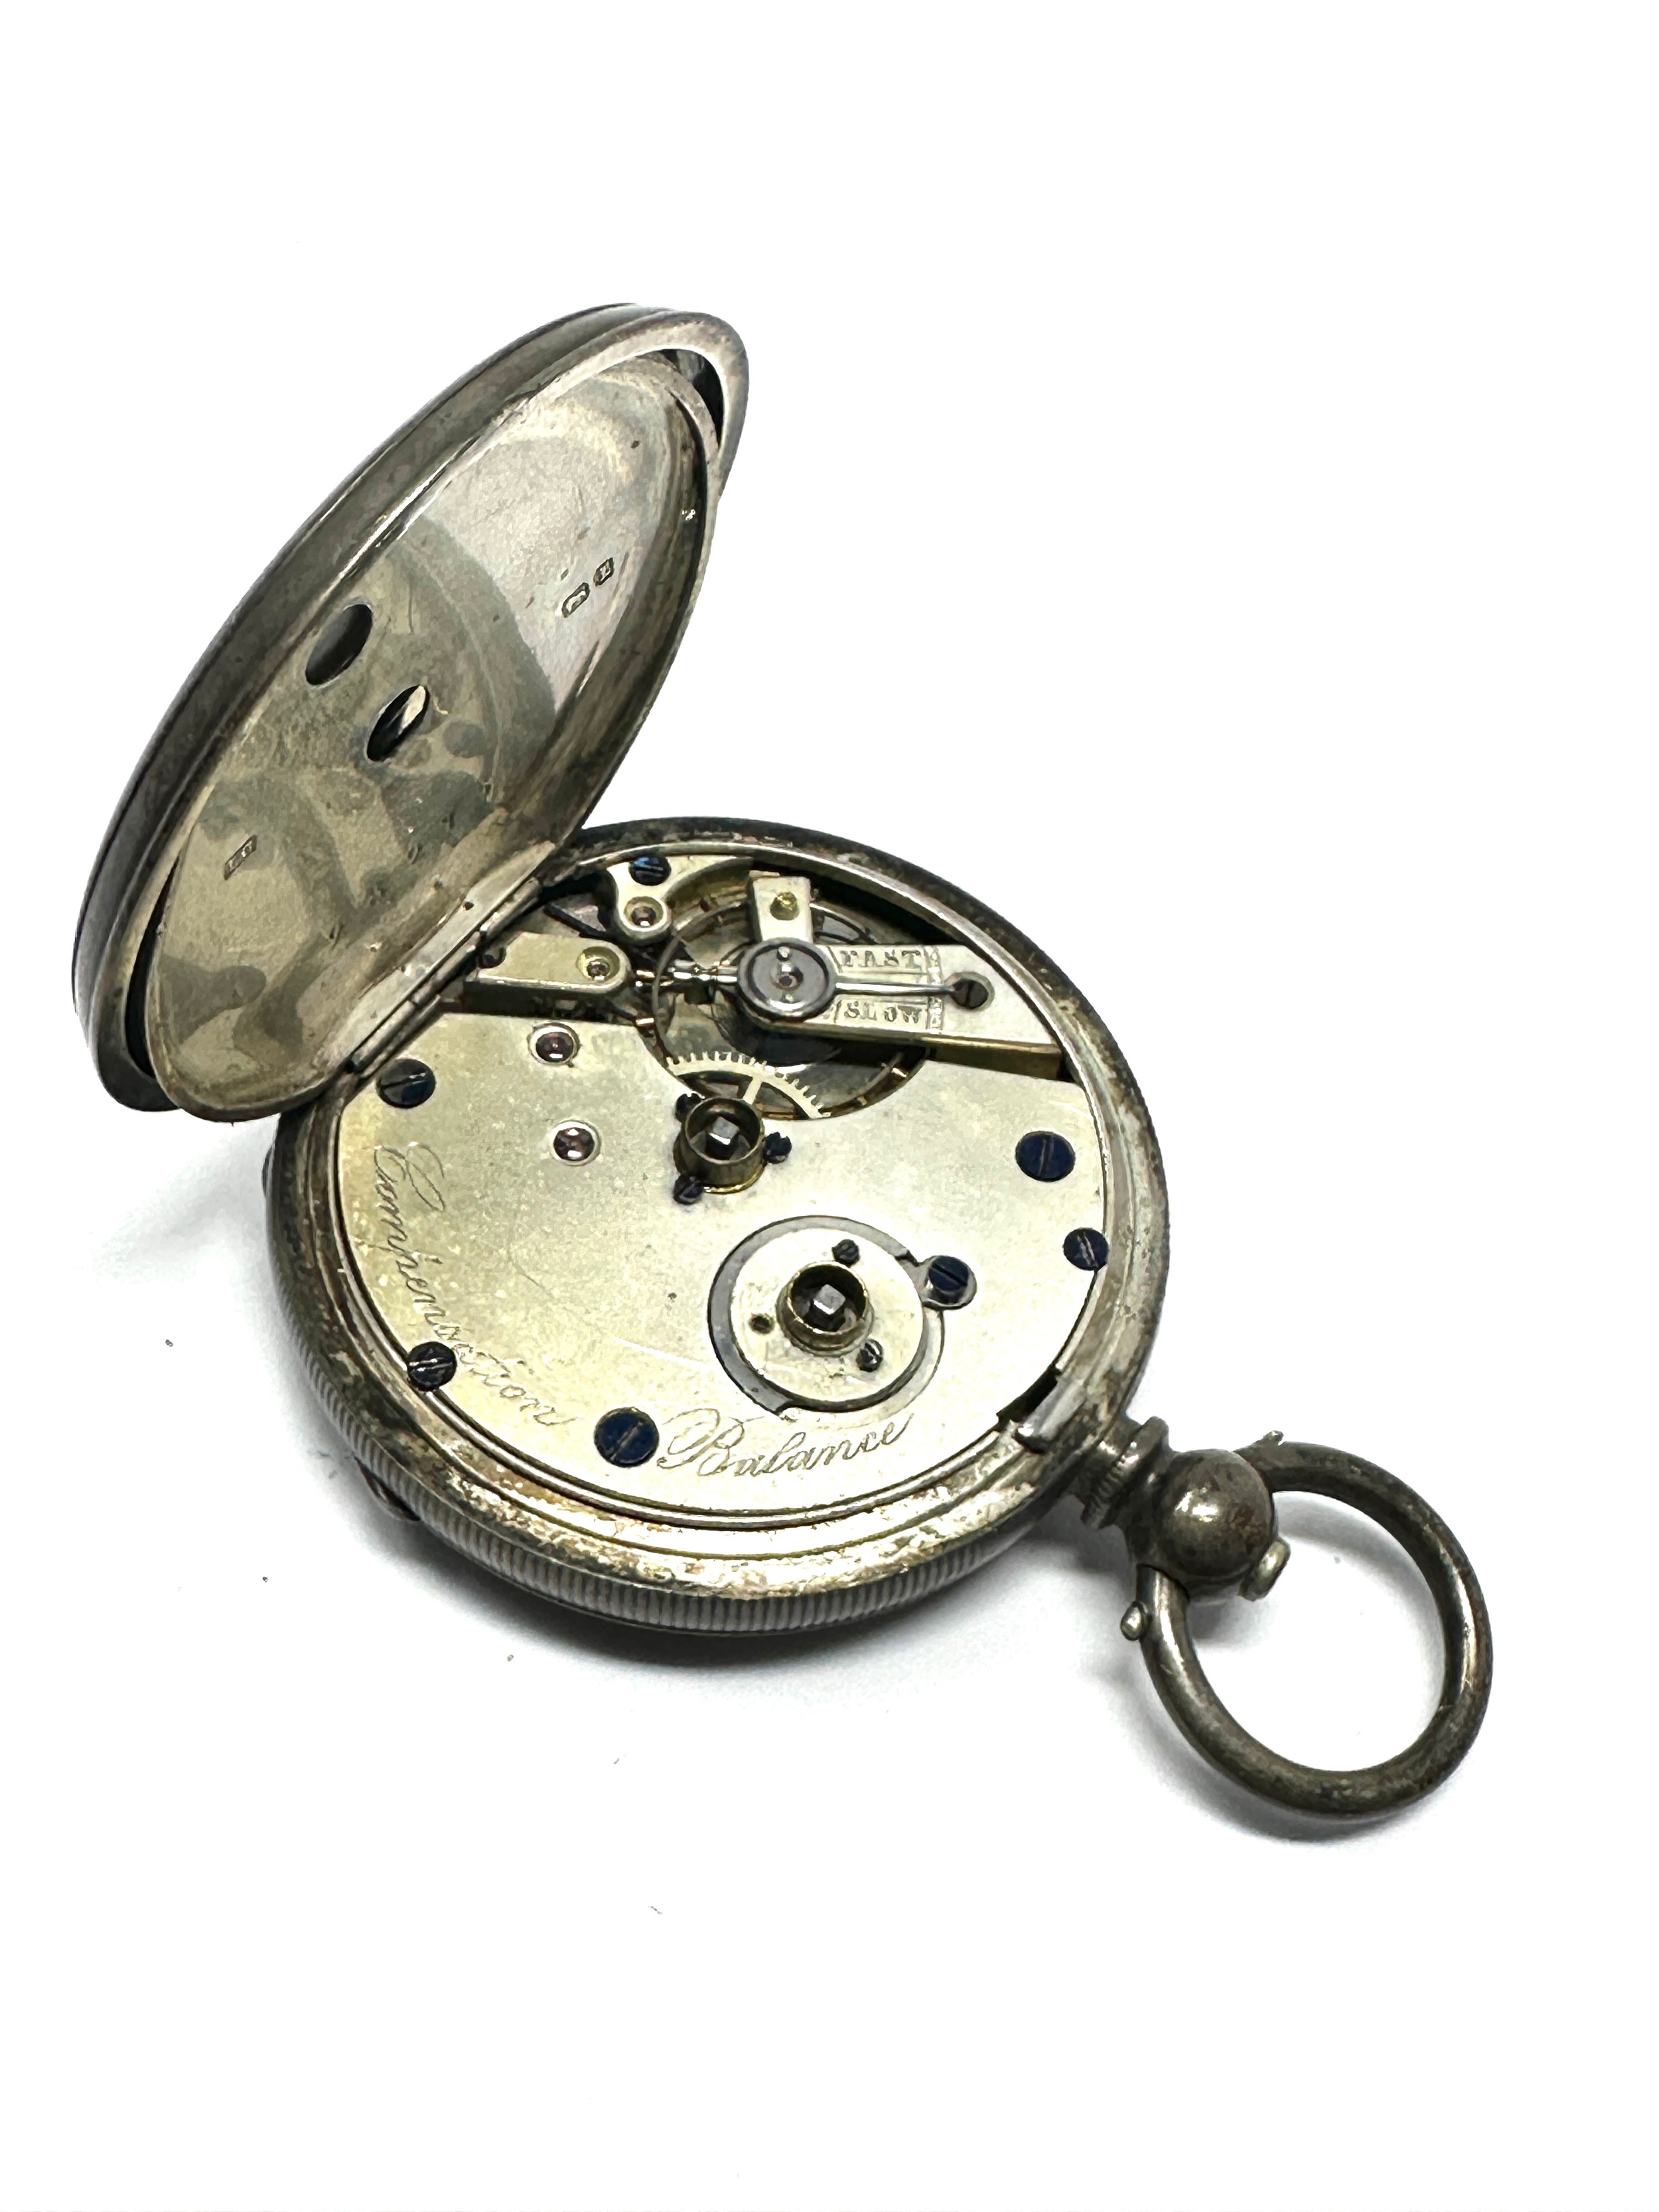 Vintage Gents Sterling Silver Pocket Watch Key-wind Working - Image 3 of 3